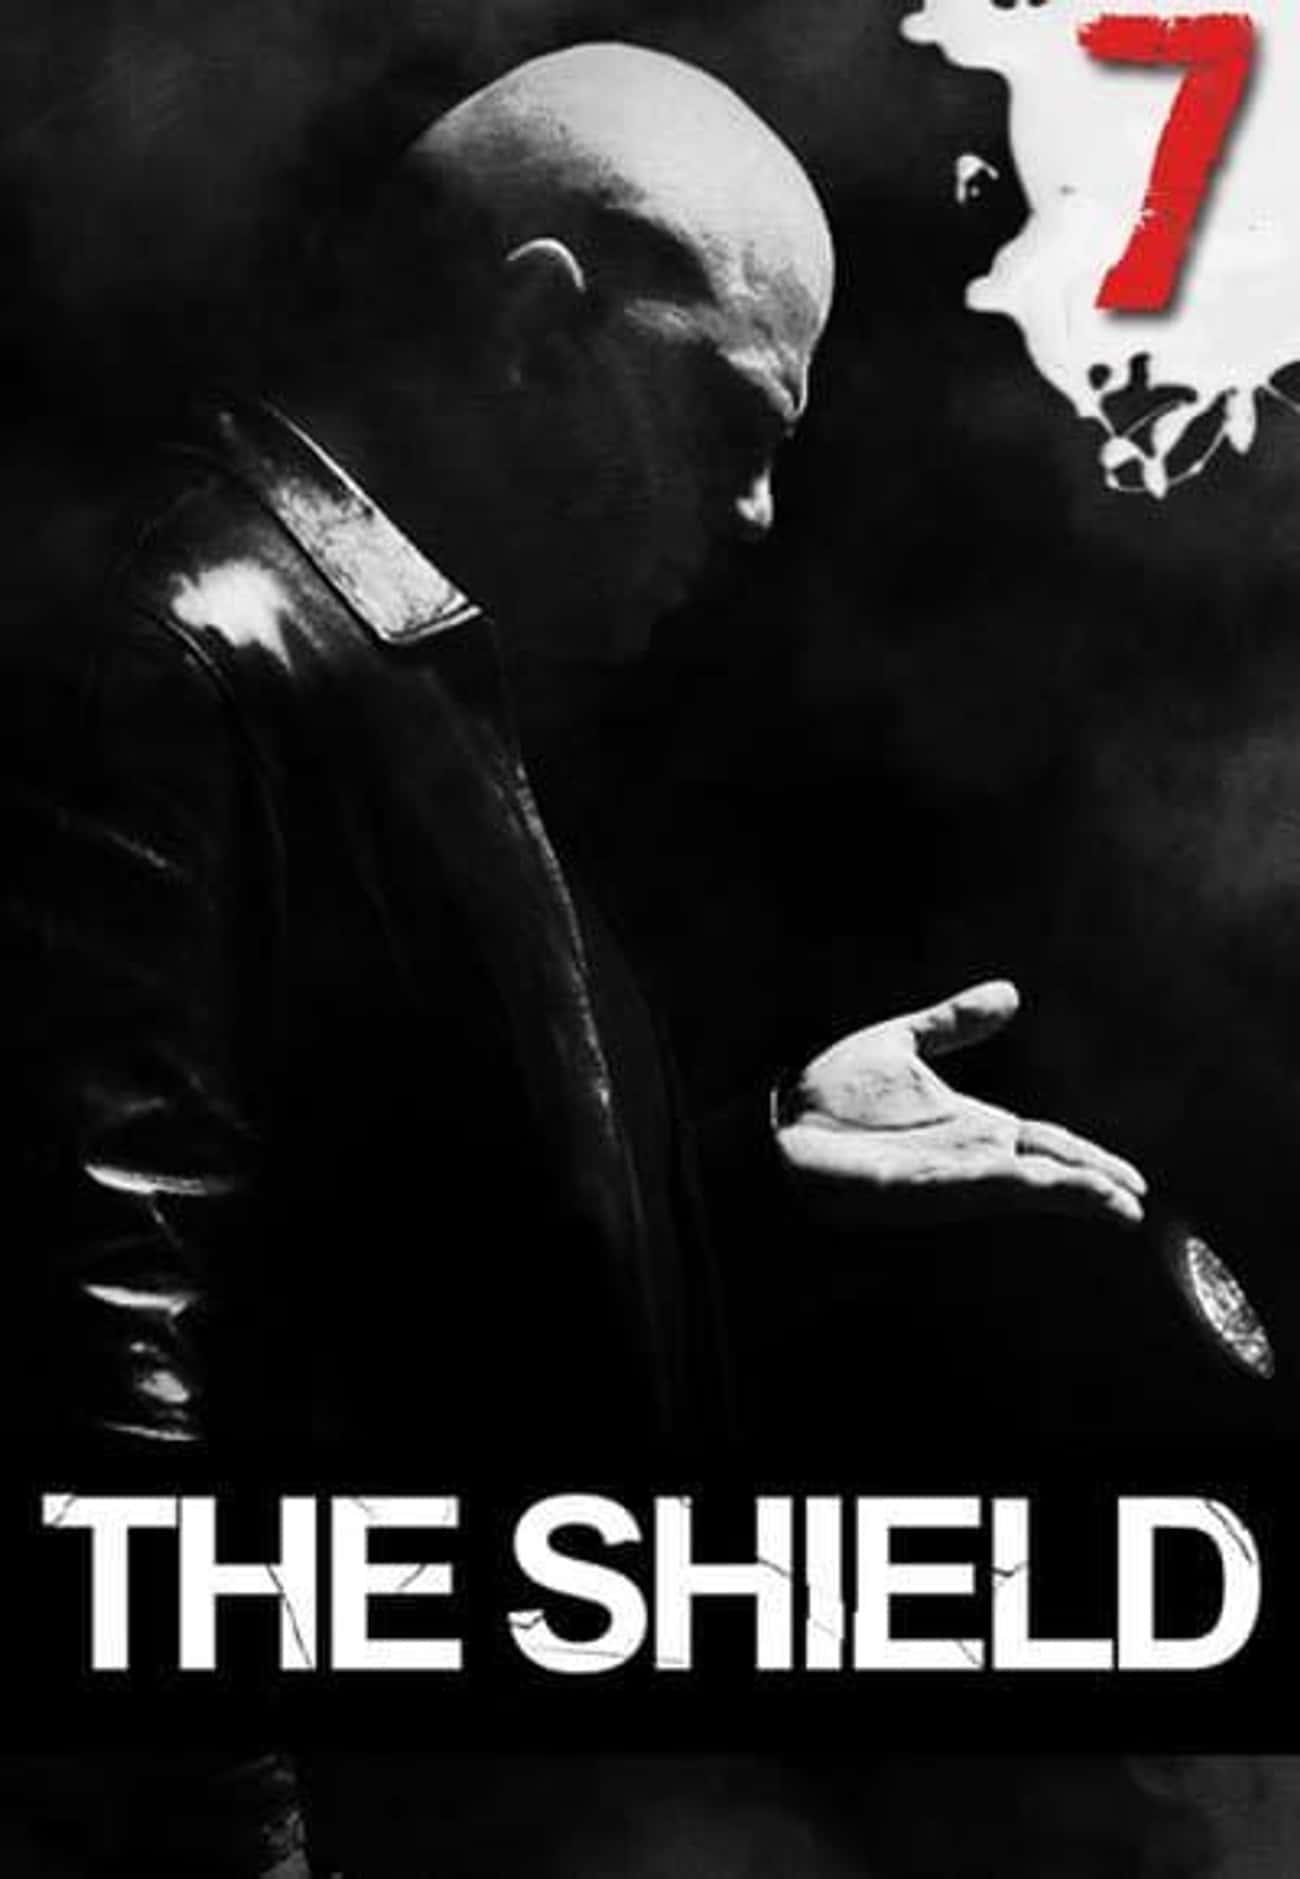 The Shield - Season 7